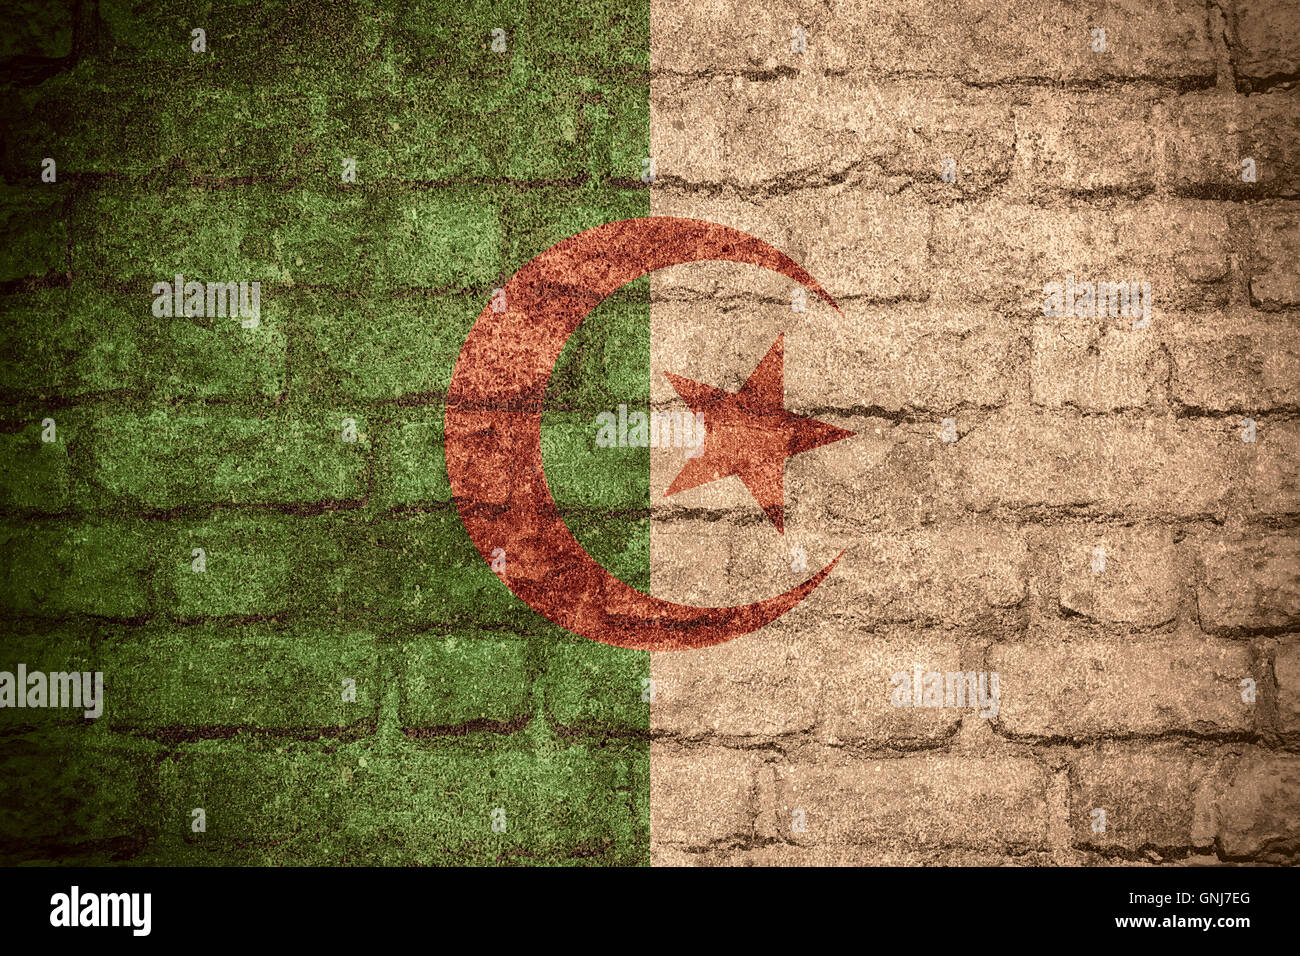 flag of Algeria or Algerian banner on brick texture Stock Photo